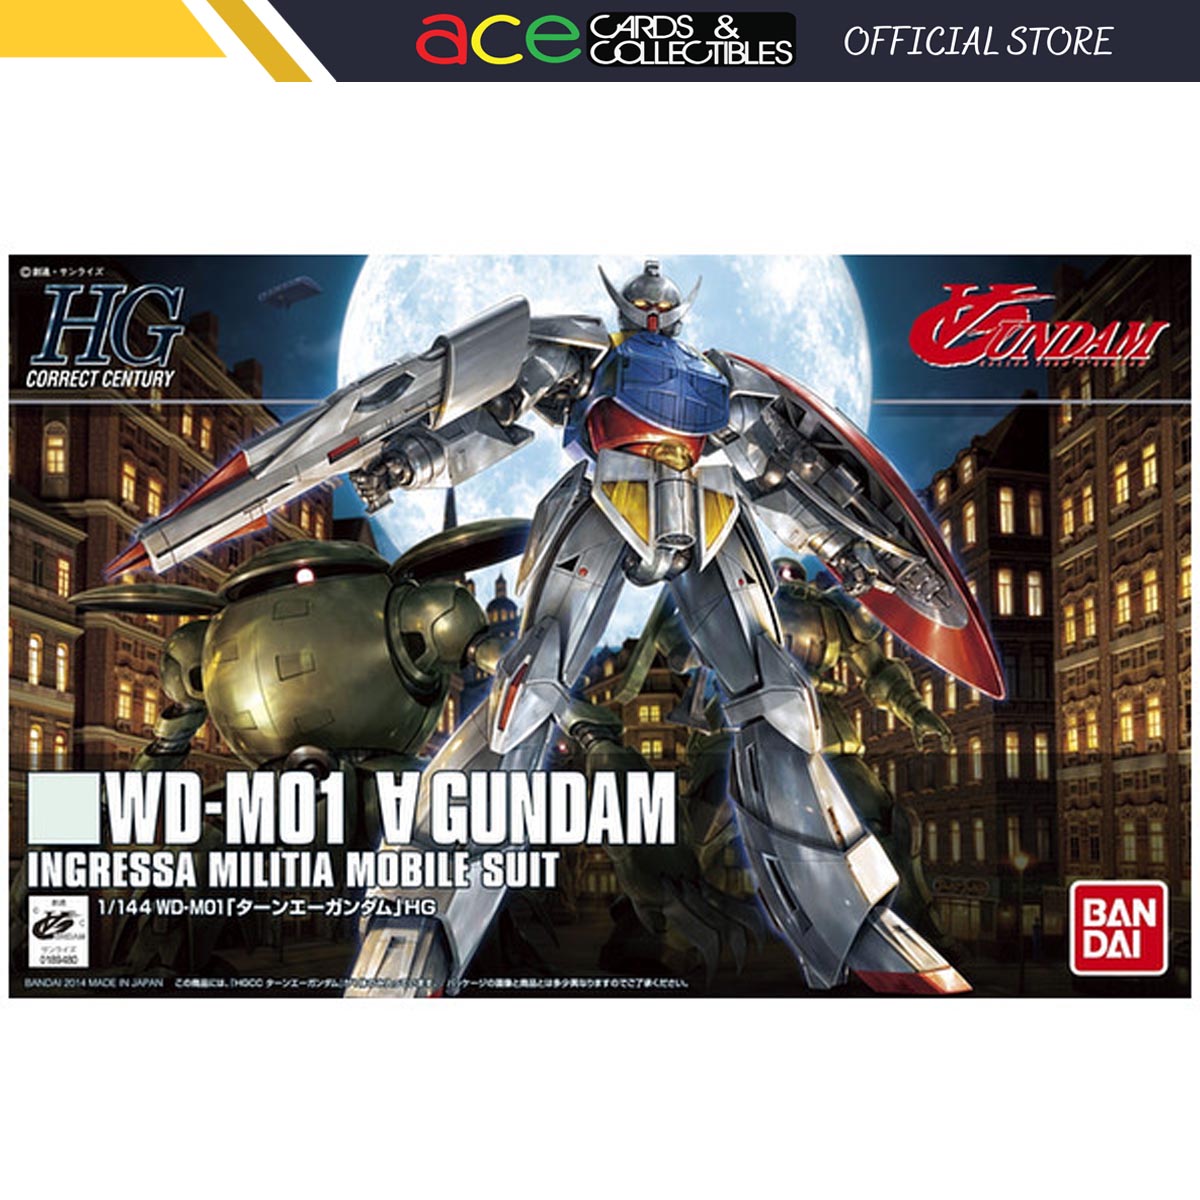 1/144 HGCC Turn A Gundam-Bandai-Ace Cards &amp; Collectibles